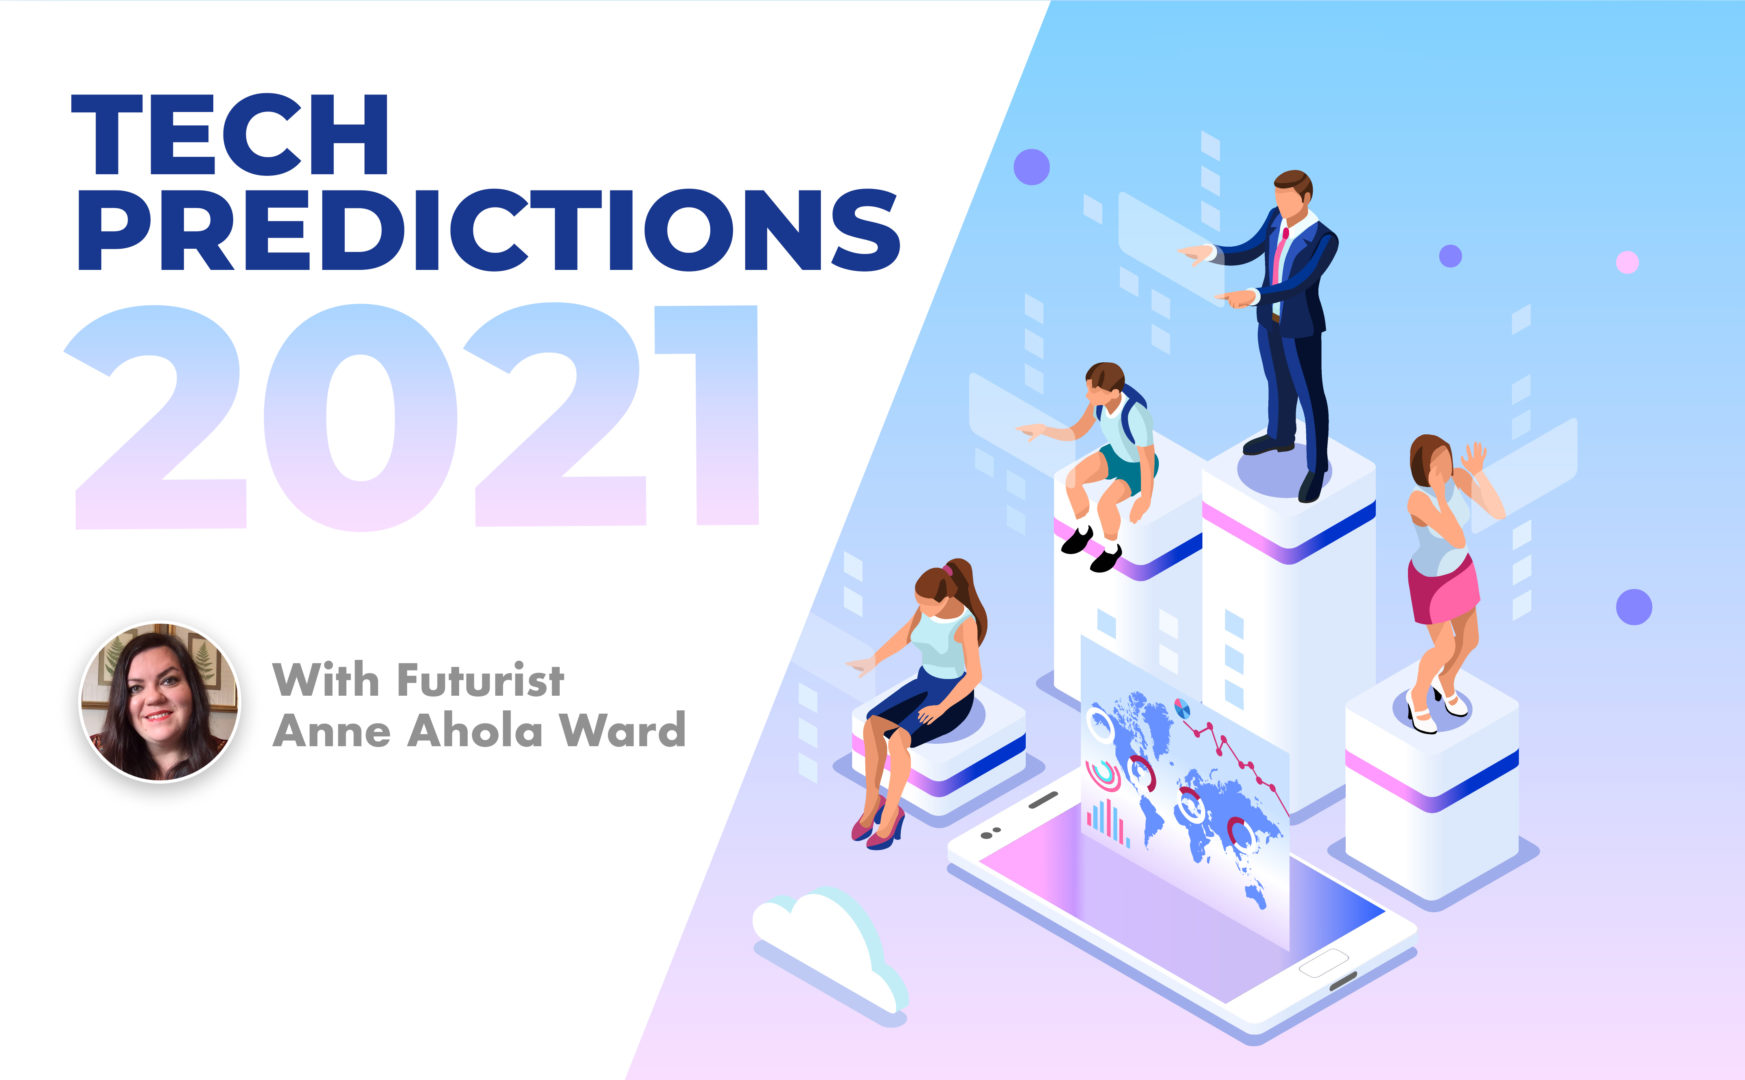 2020 Tech Predictions